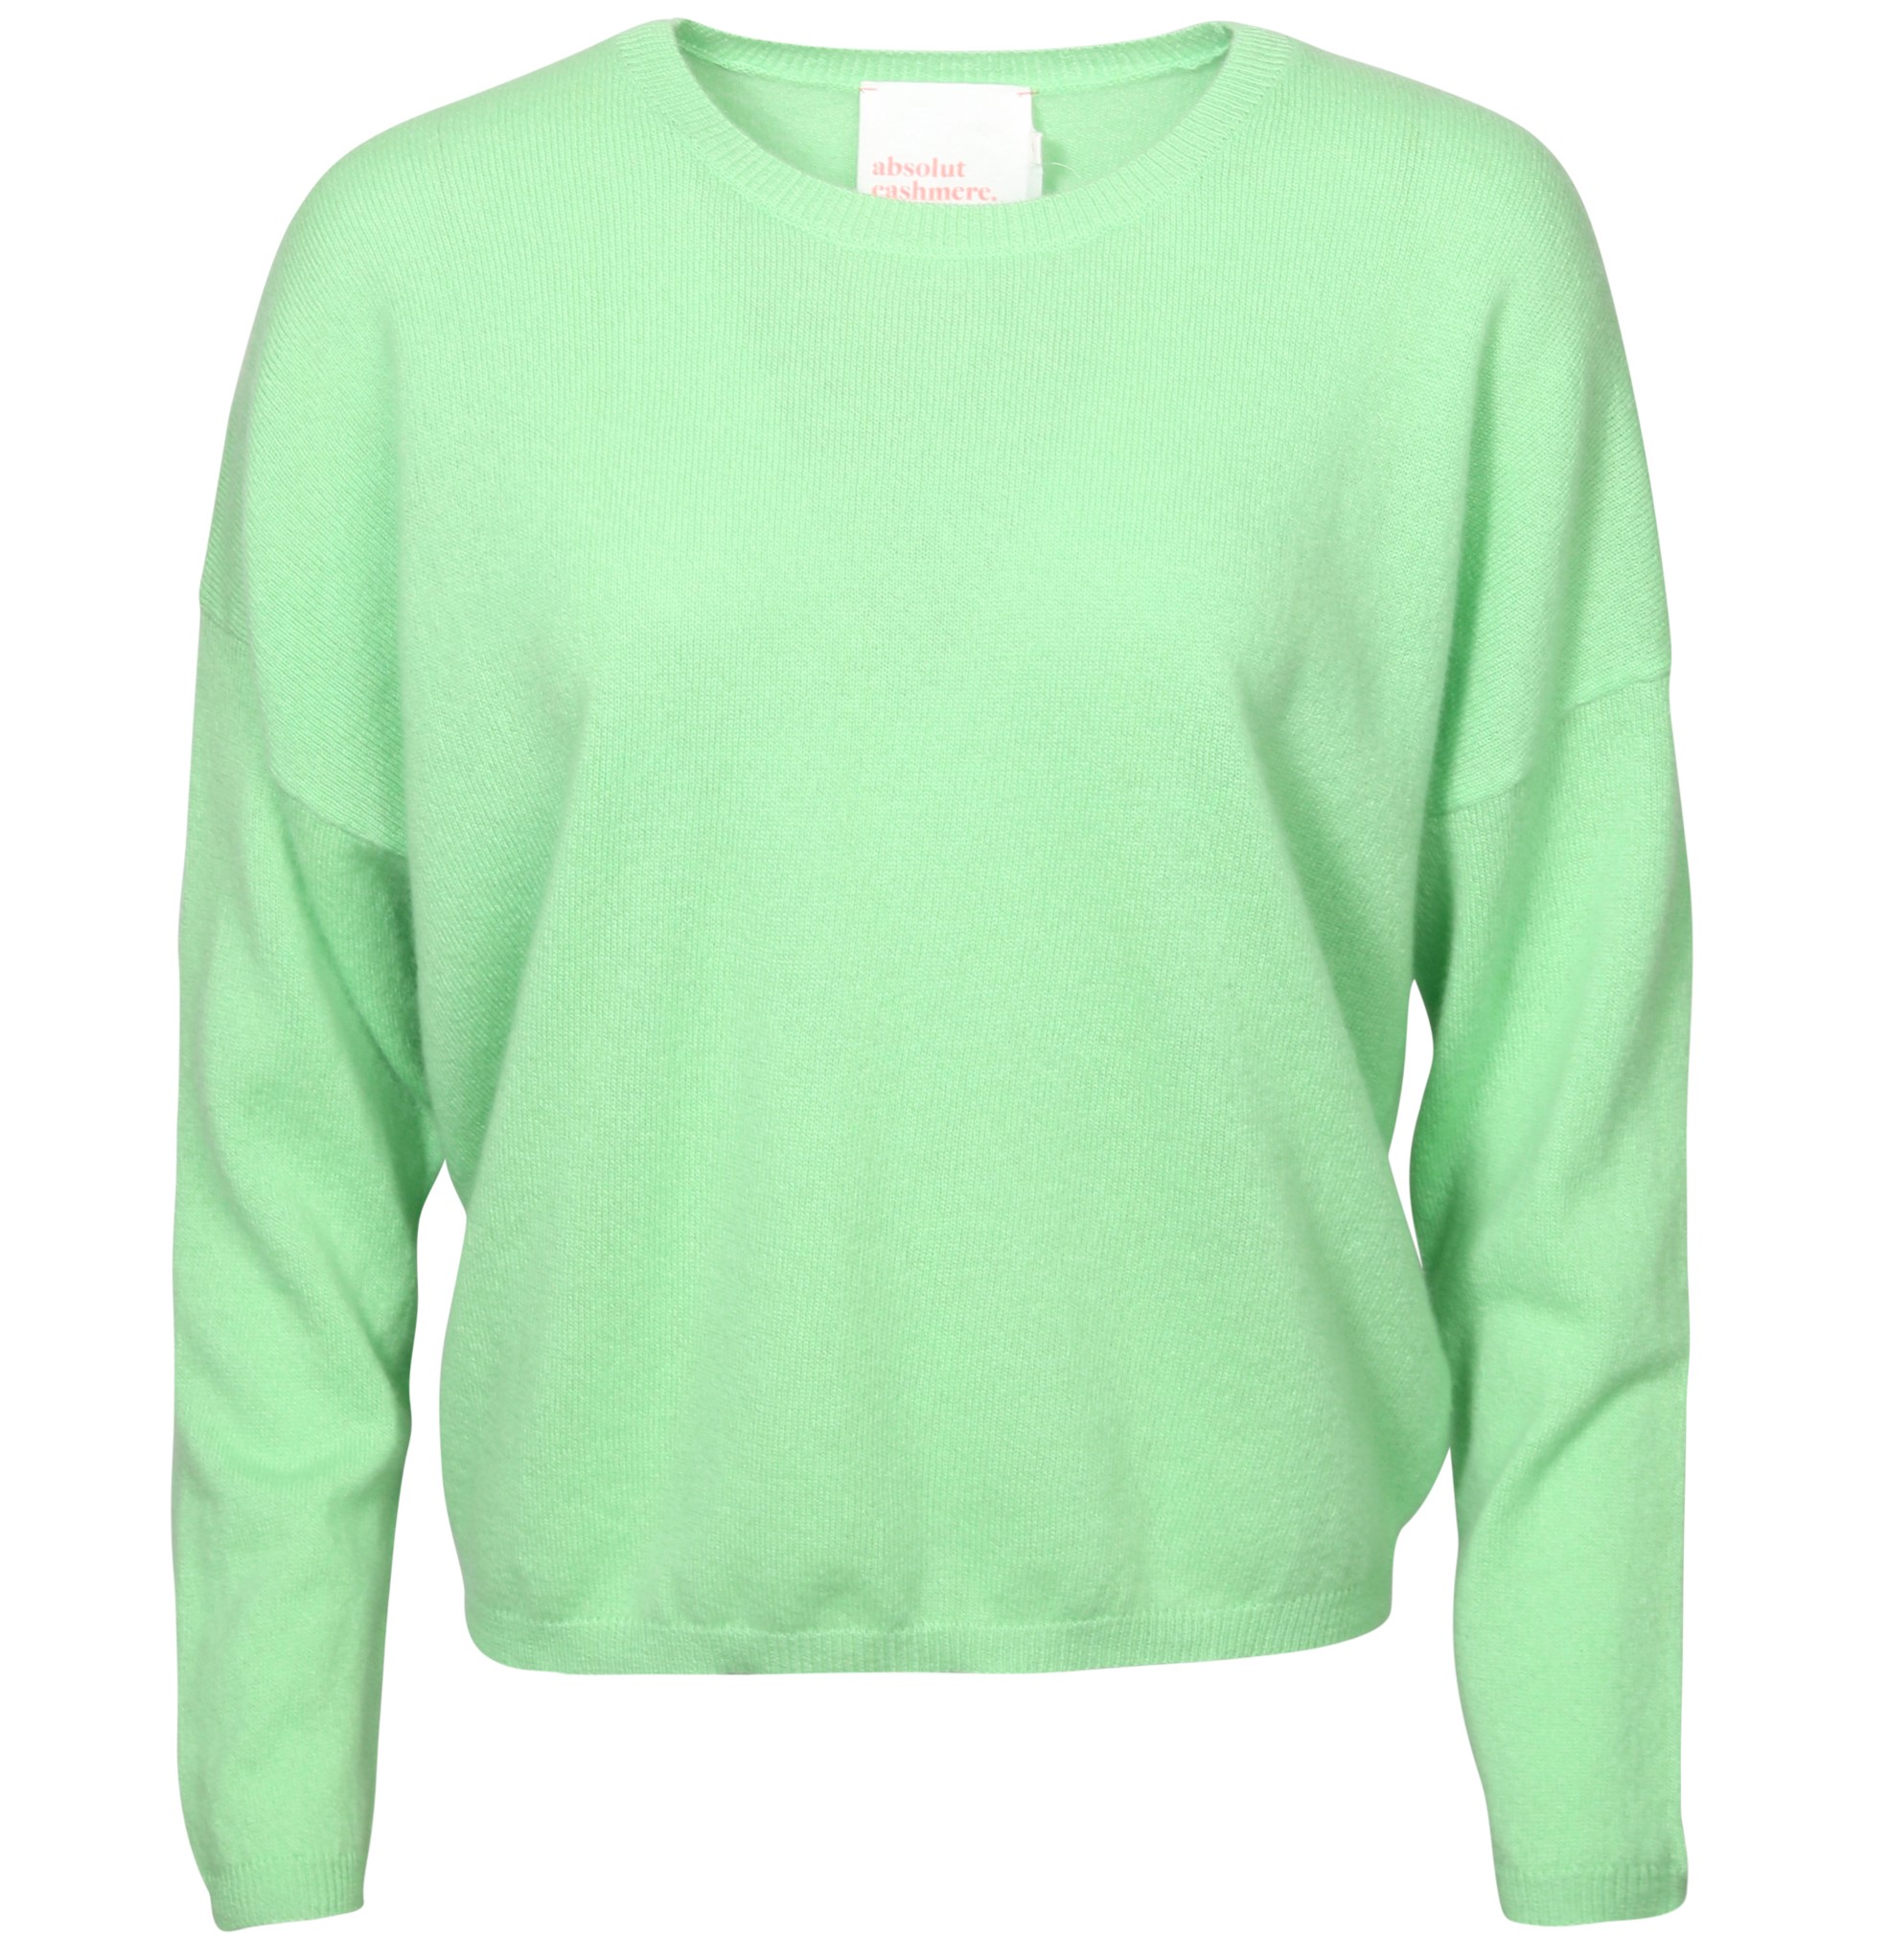 ABSOLUT CASHMERE Round Neck Sweater Kaira in Light Green L